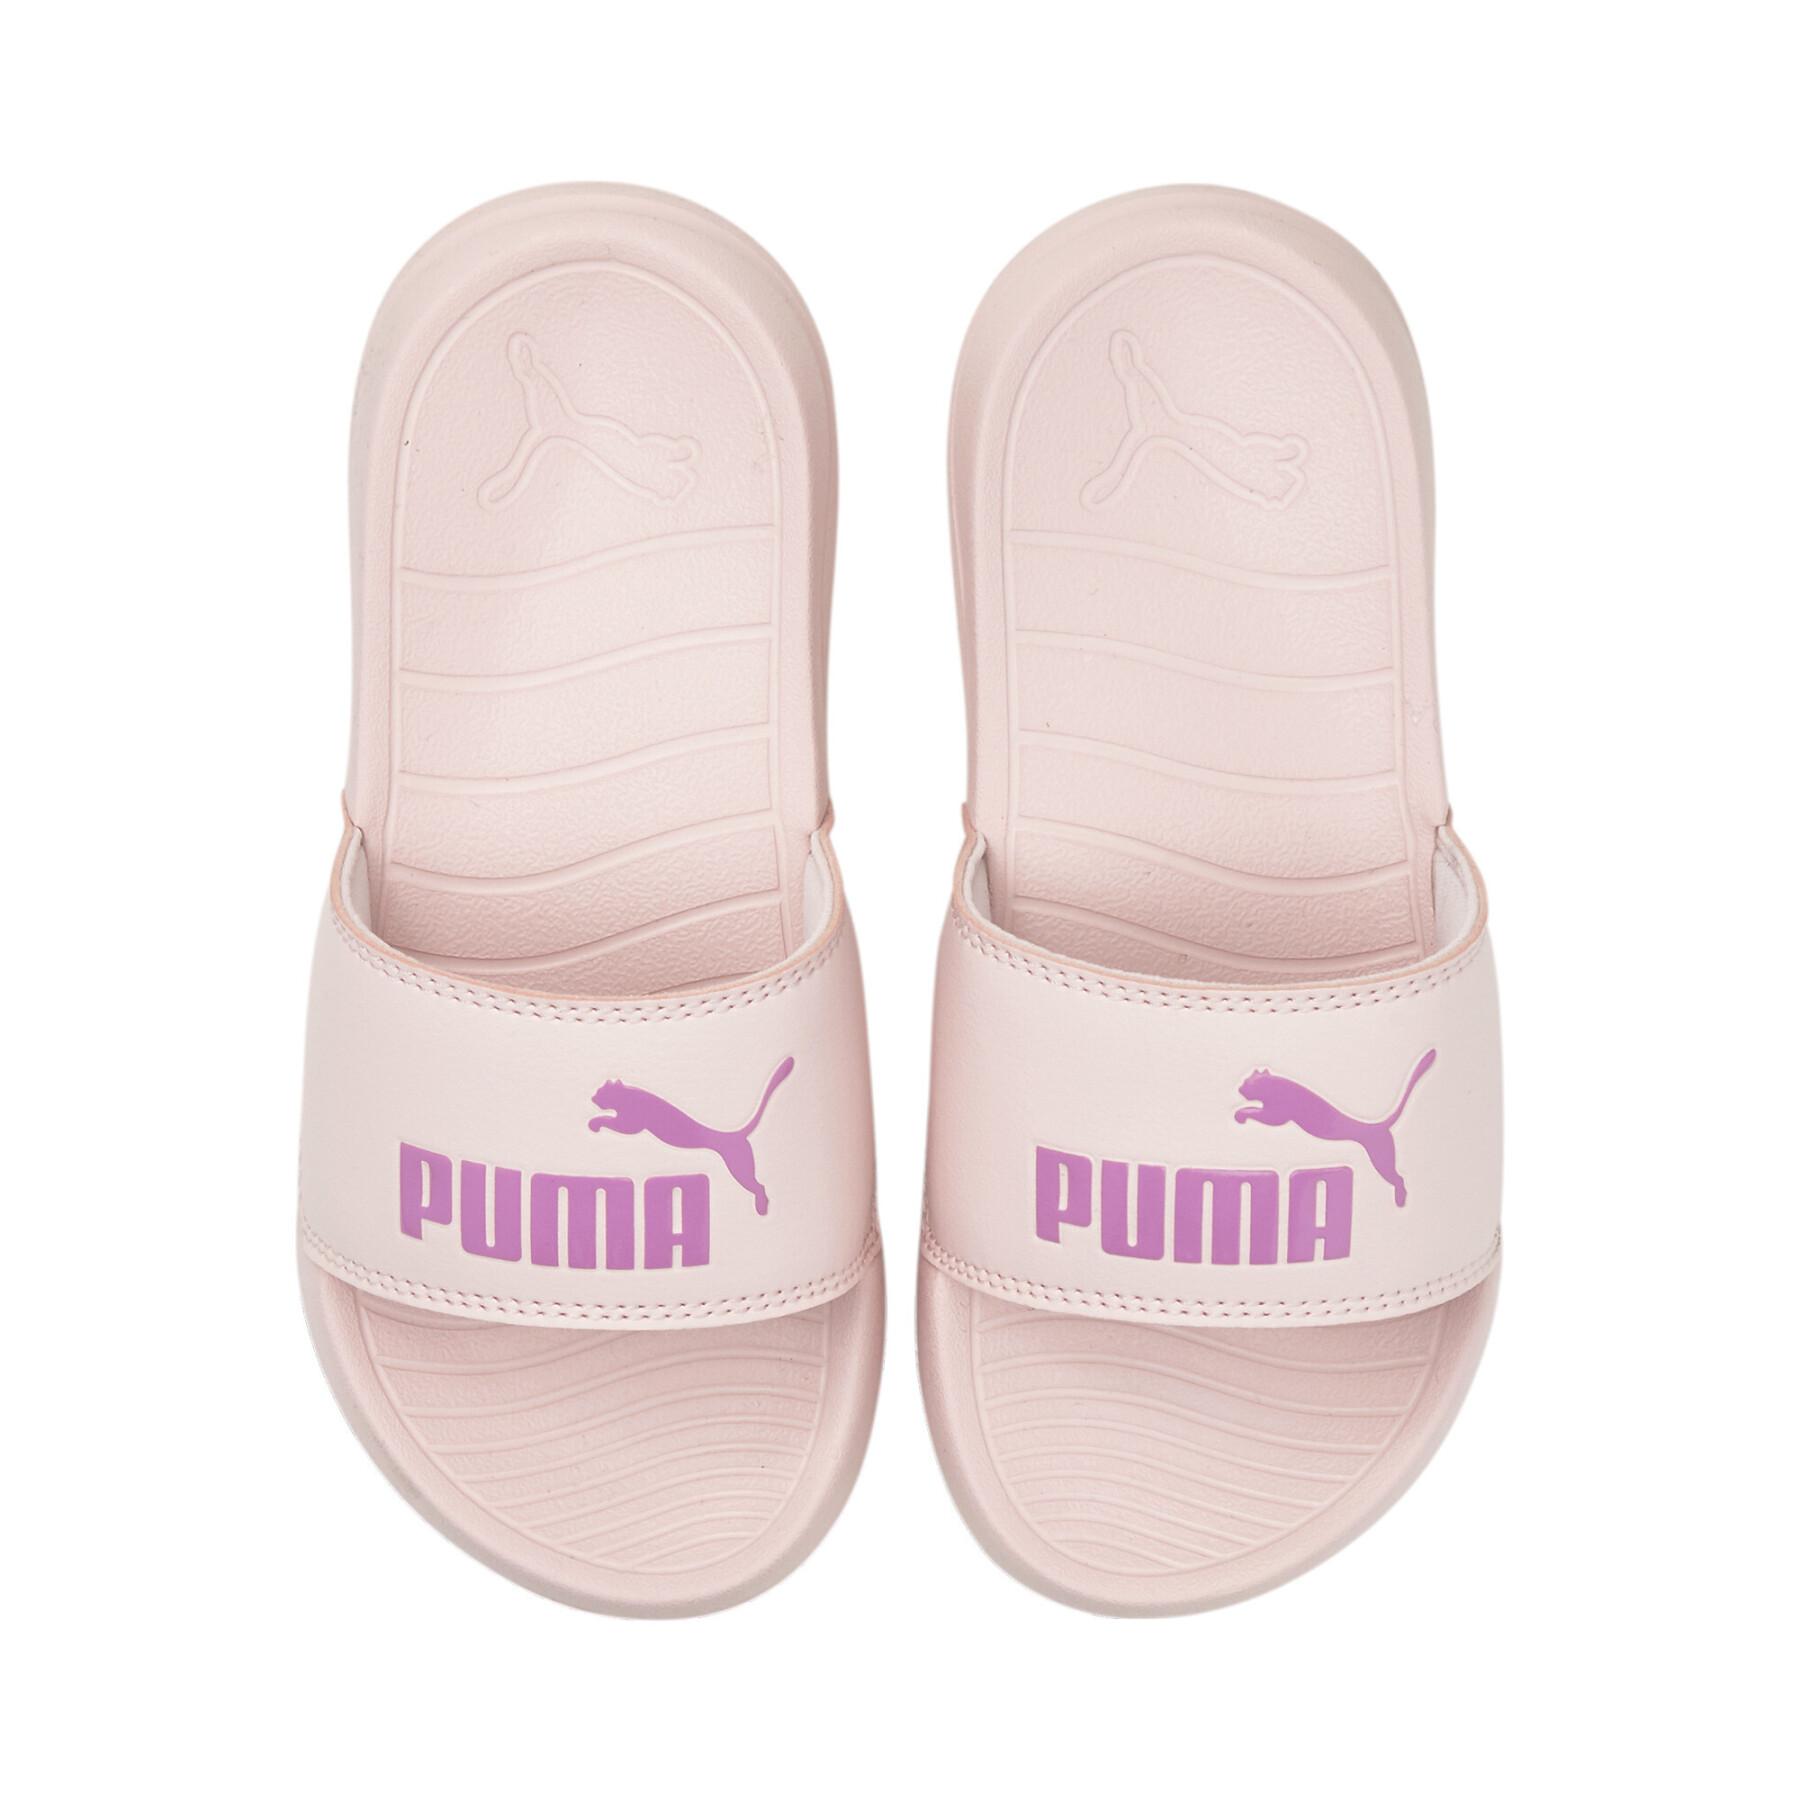 Chaussures enfant Puma Popcat 20 PS